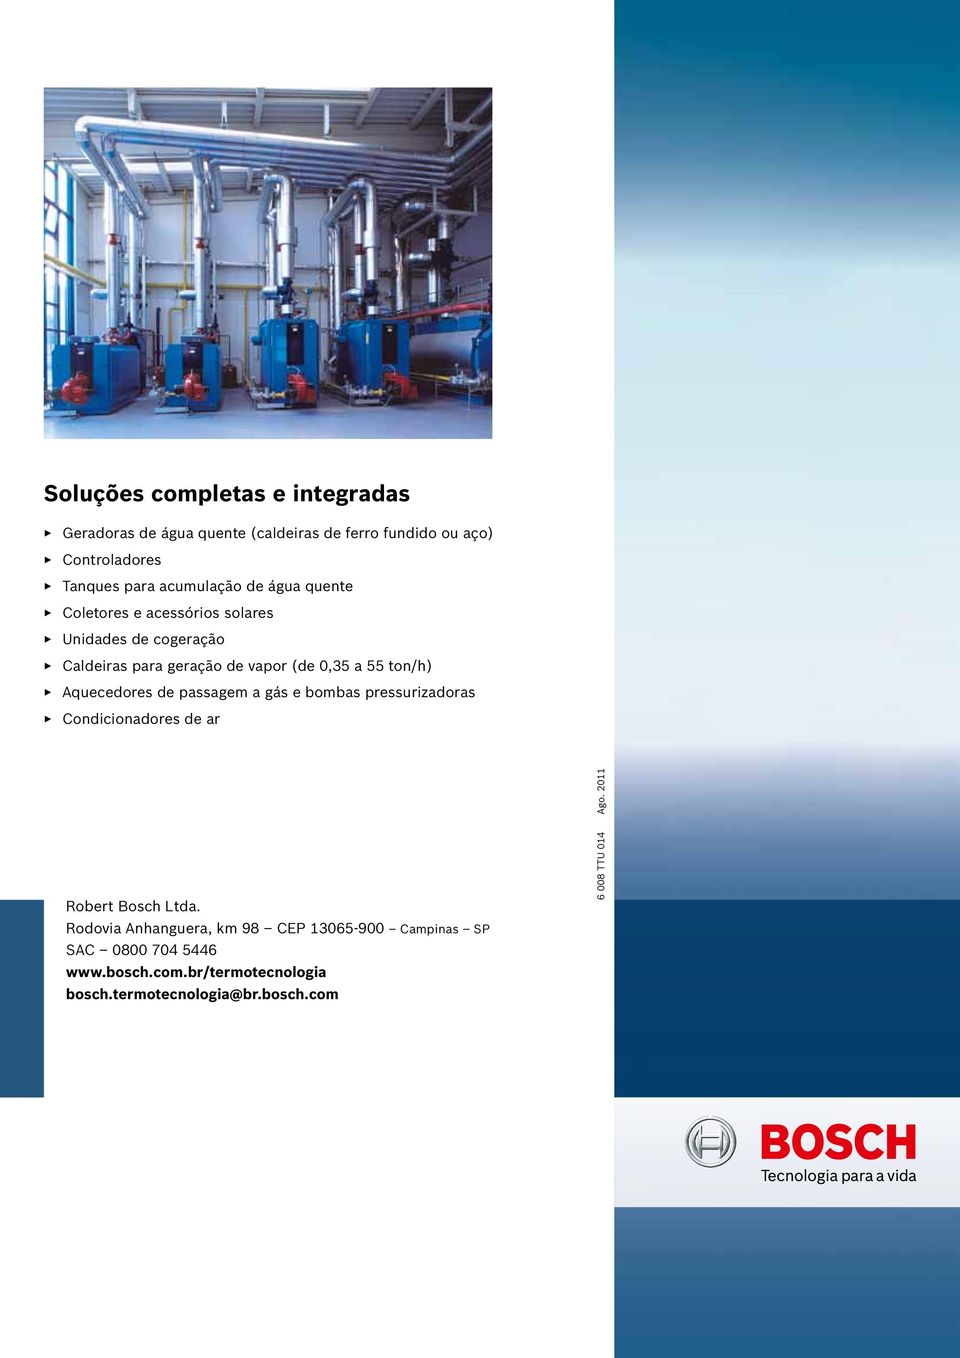 ton/h) Aquecedores de passagem a gás e bombas pressurizadoras Condicionadores de ar Robert Bosch Ltda.